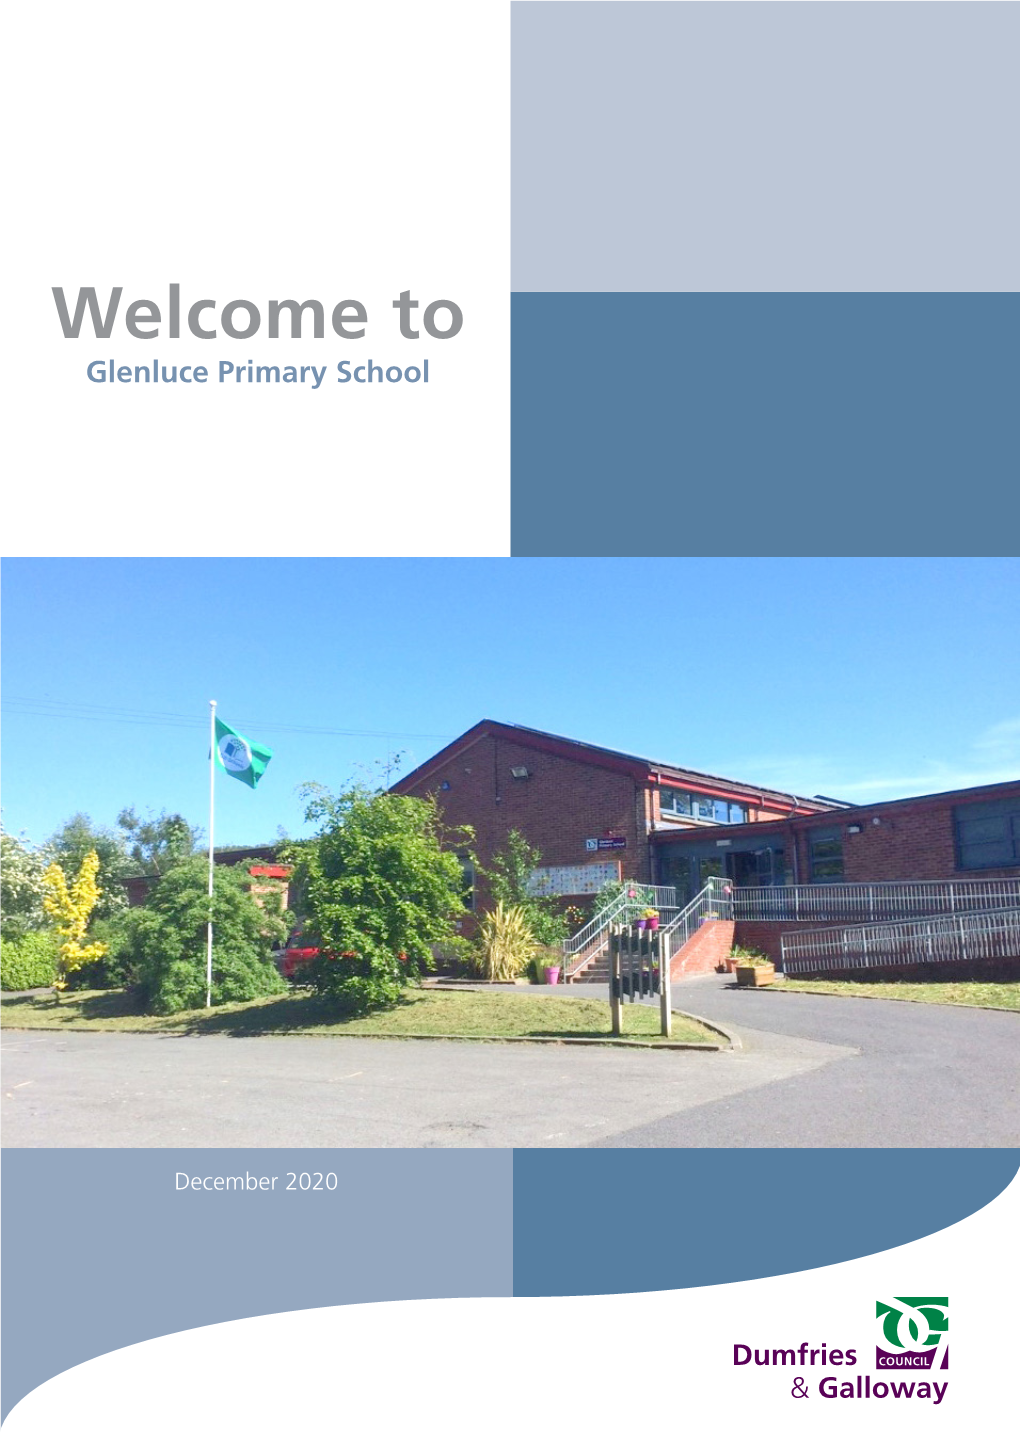 Glenluce Primary School